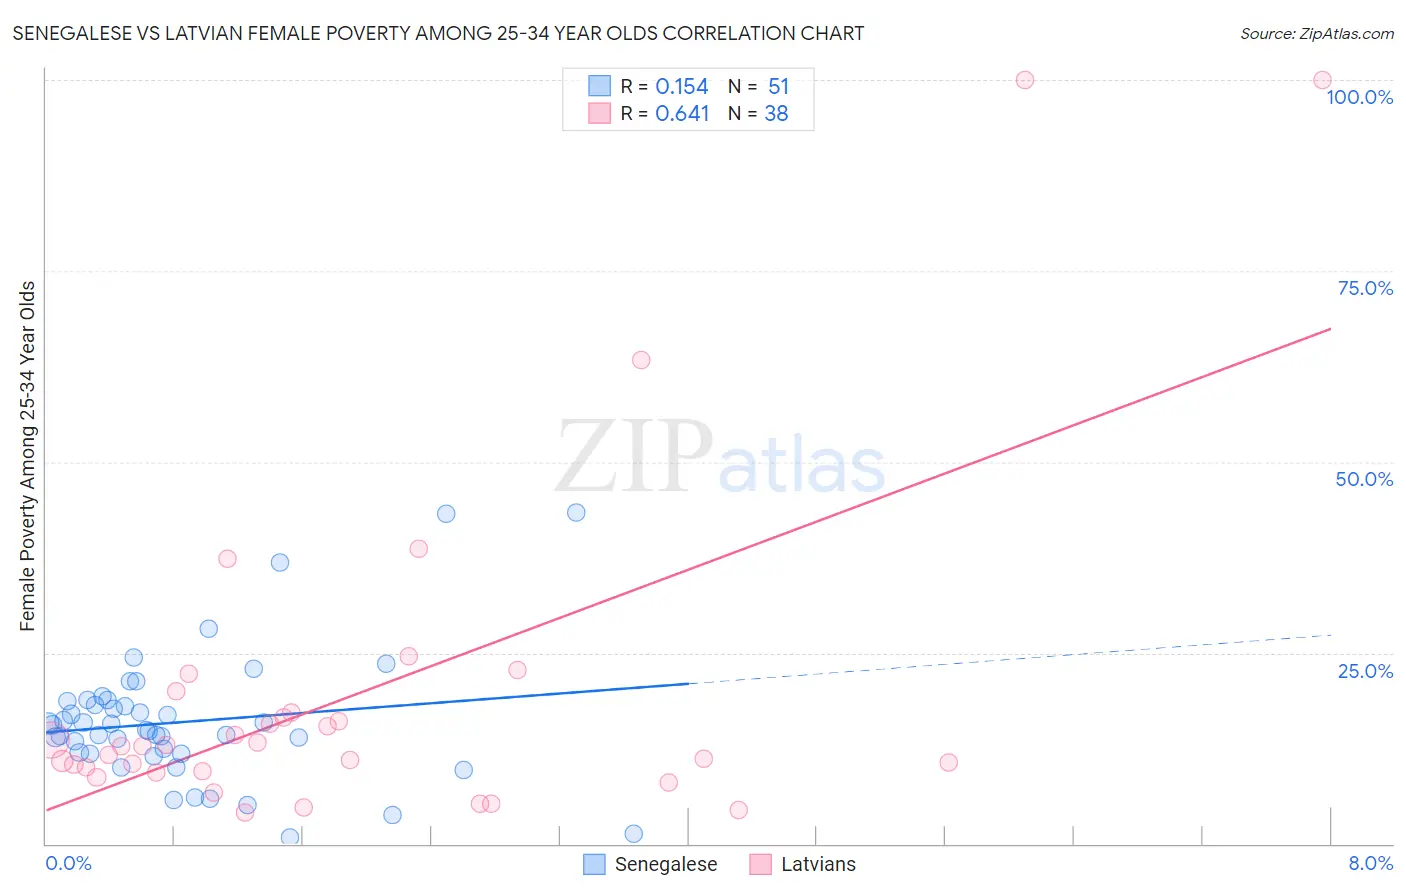 Senegalese vs Latvian Female Poverty Among 25-34 Year Olds